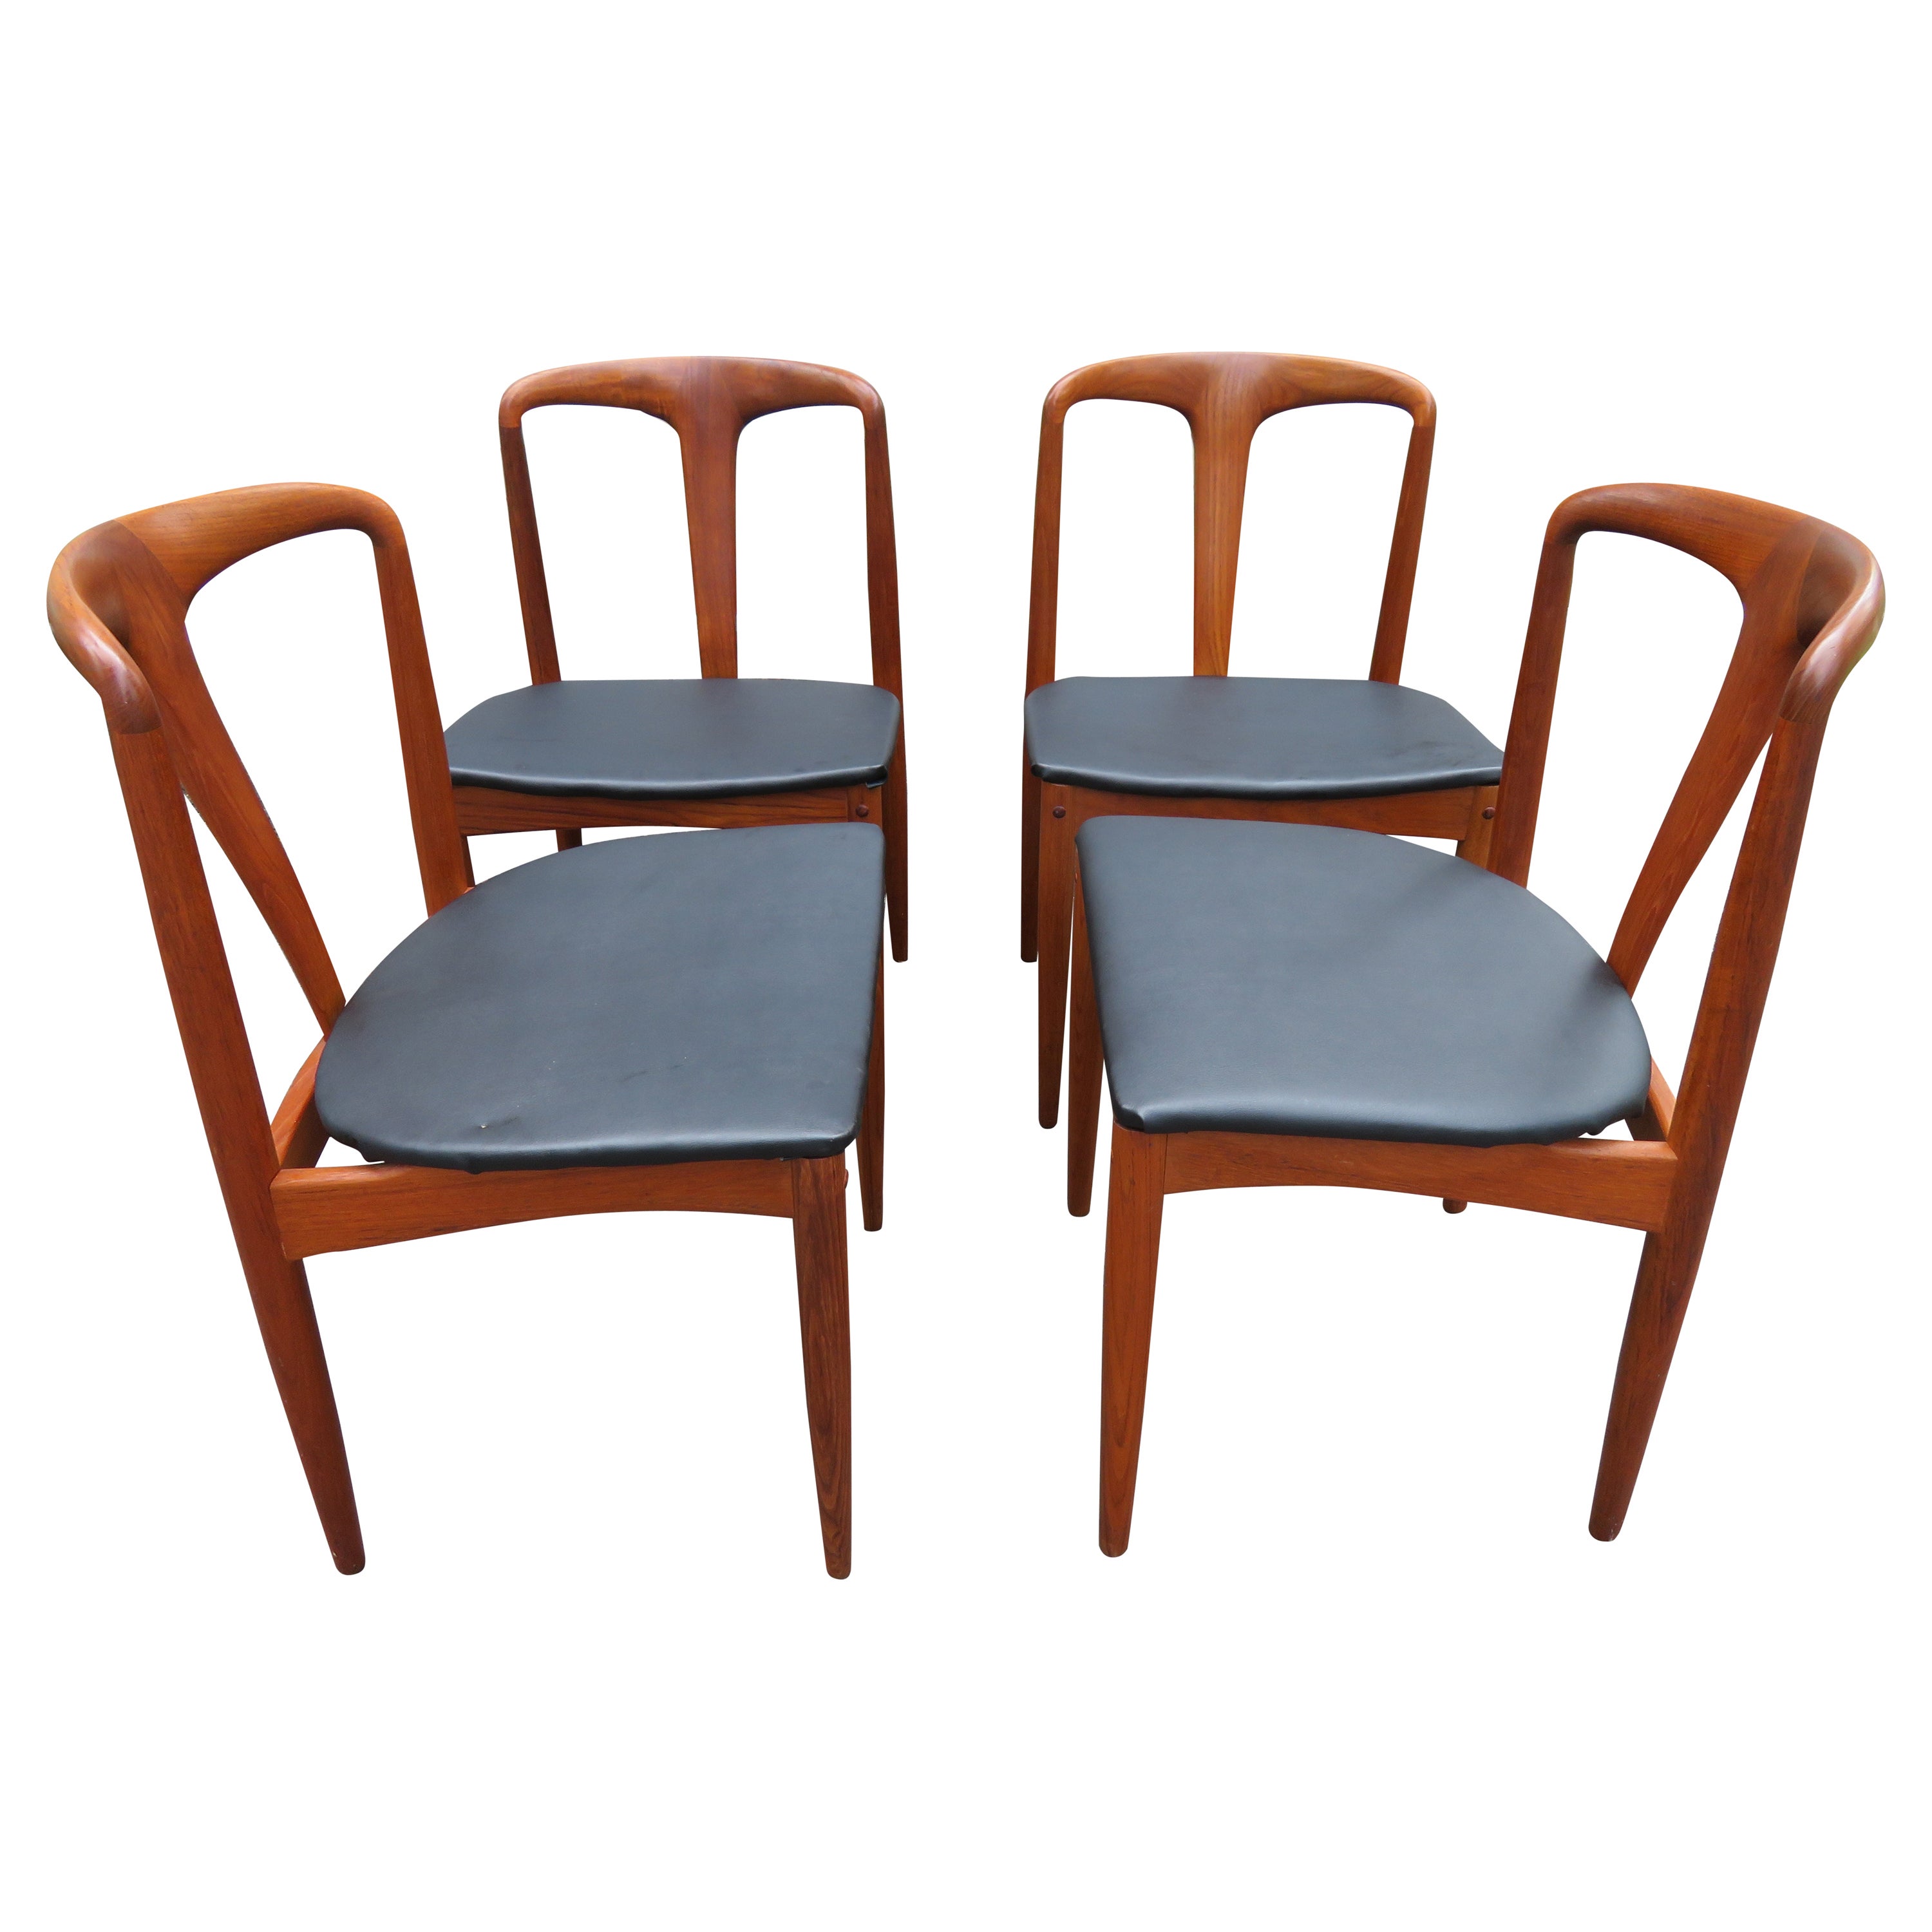 Ensemble de 4 chaises de salle à manger danoises en teck Juliane de Johannes Andersen Uldum Mbelfabrik